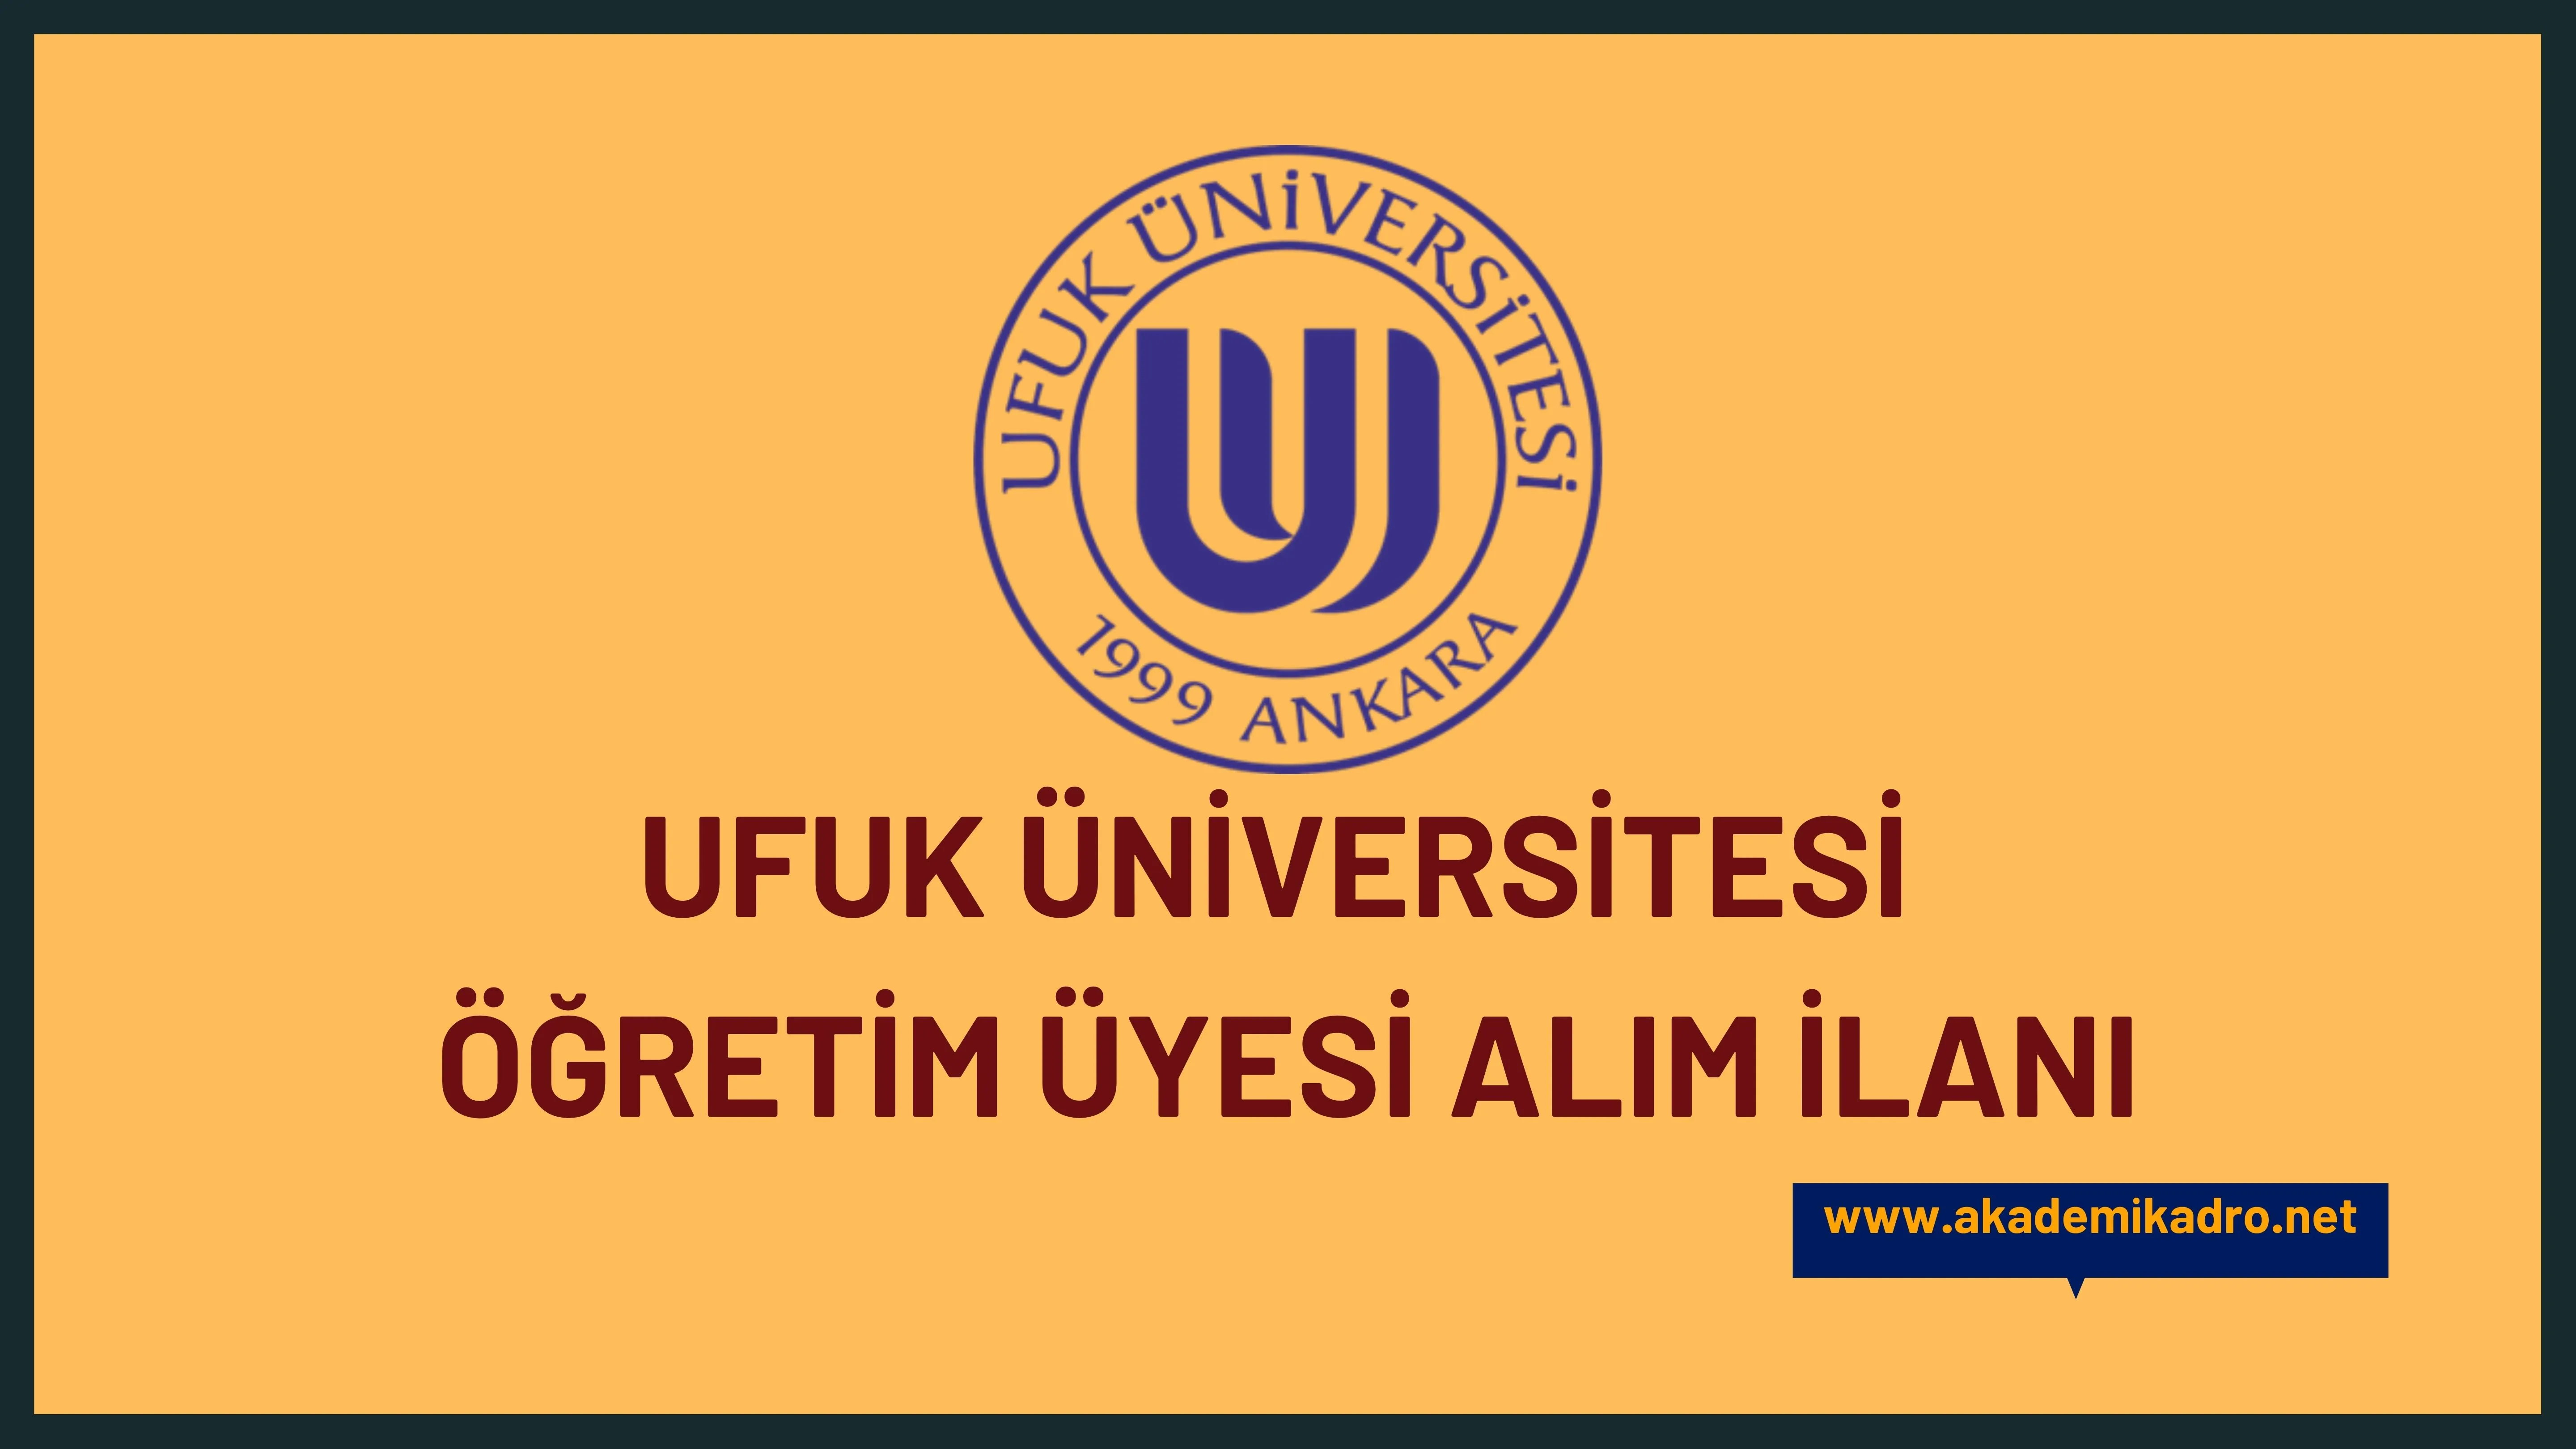 Ufuk Üniversitesi 14 akademik personel alacak